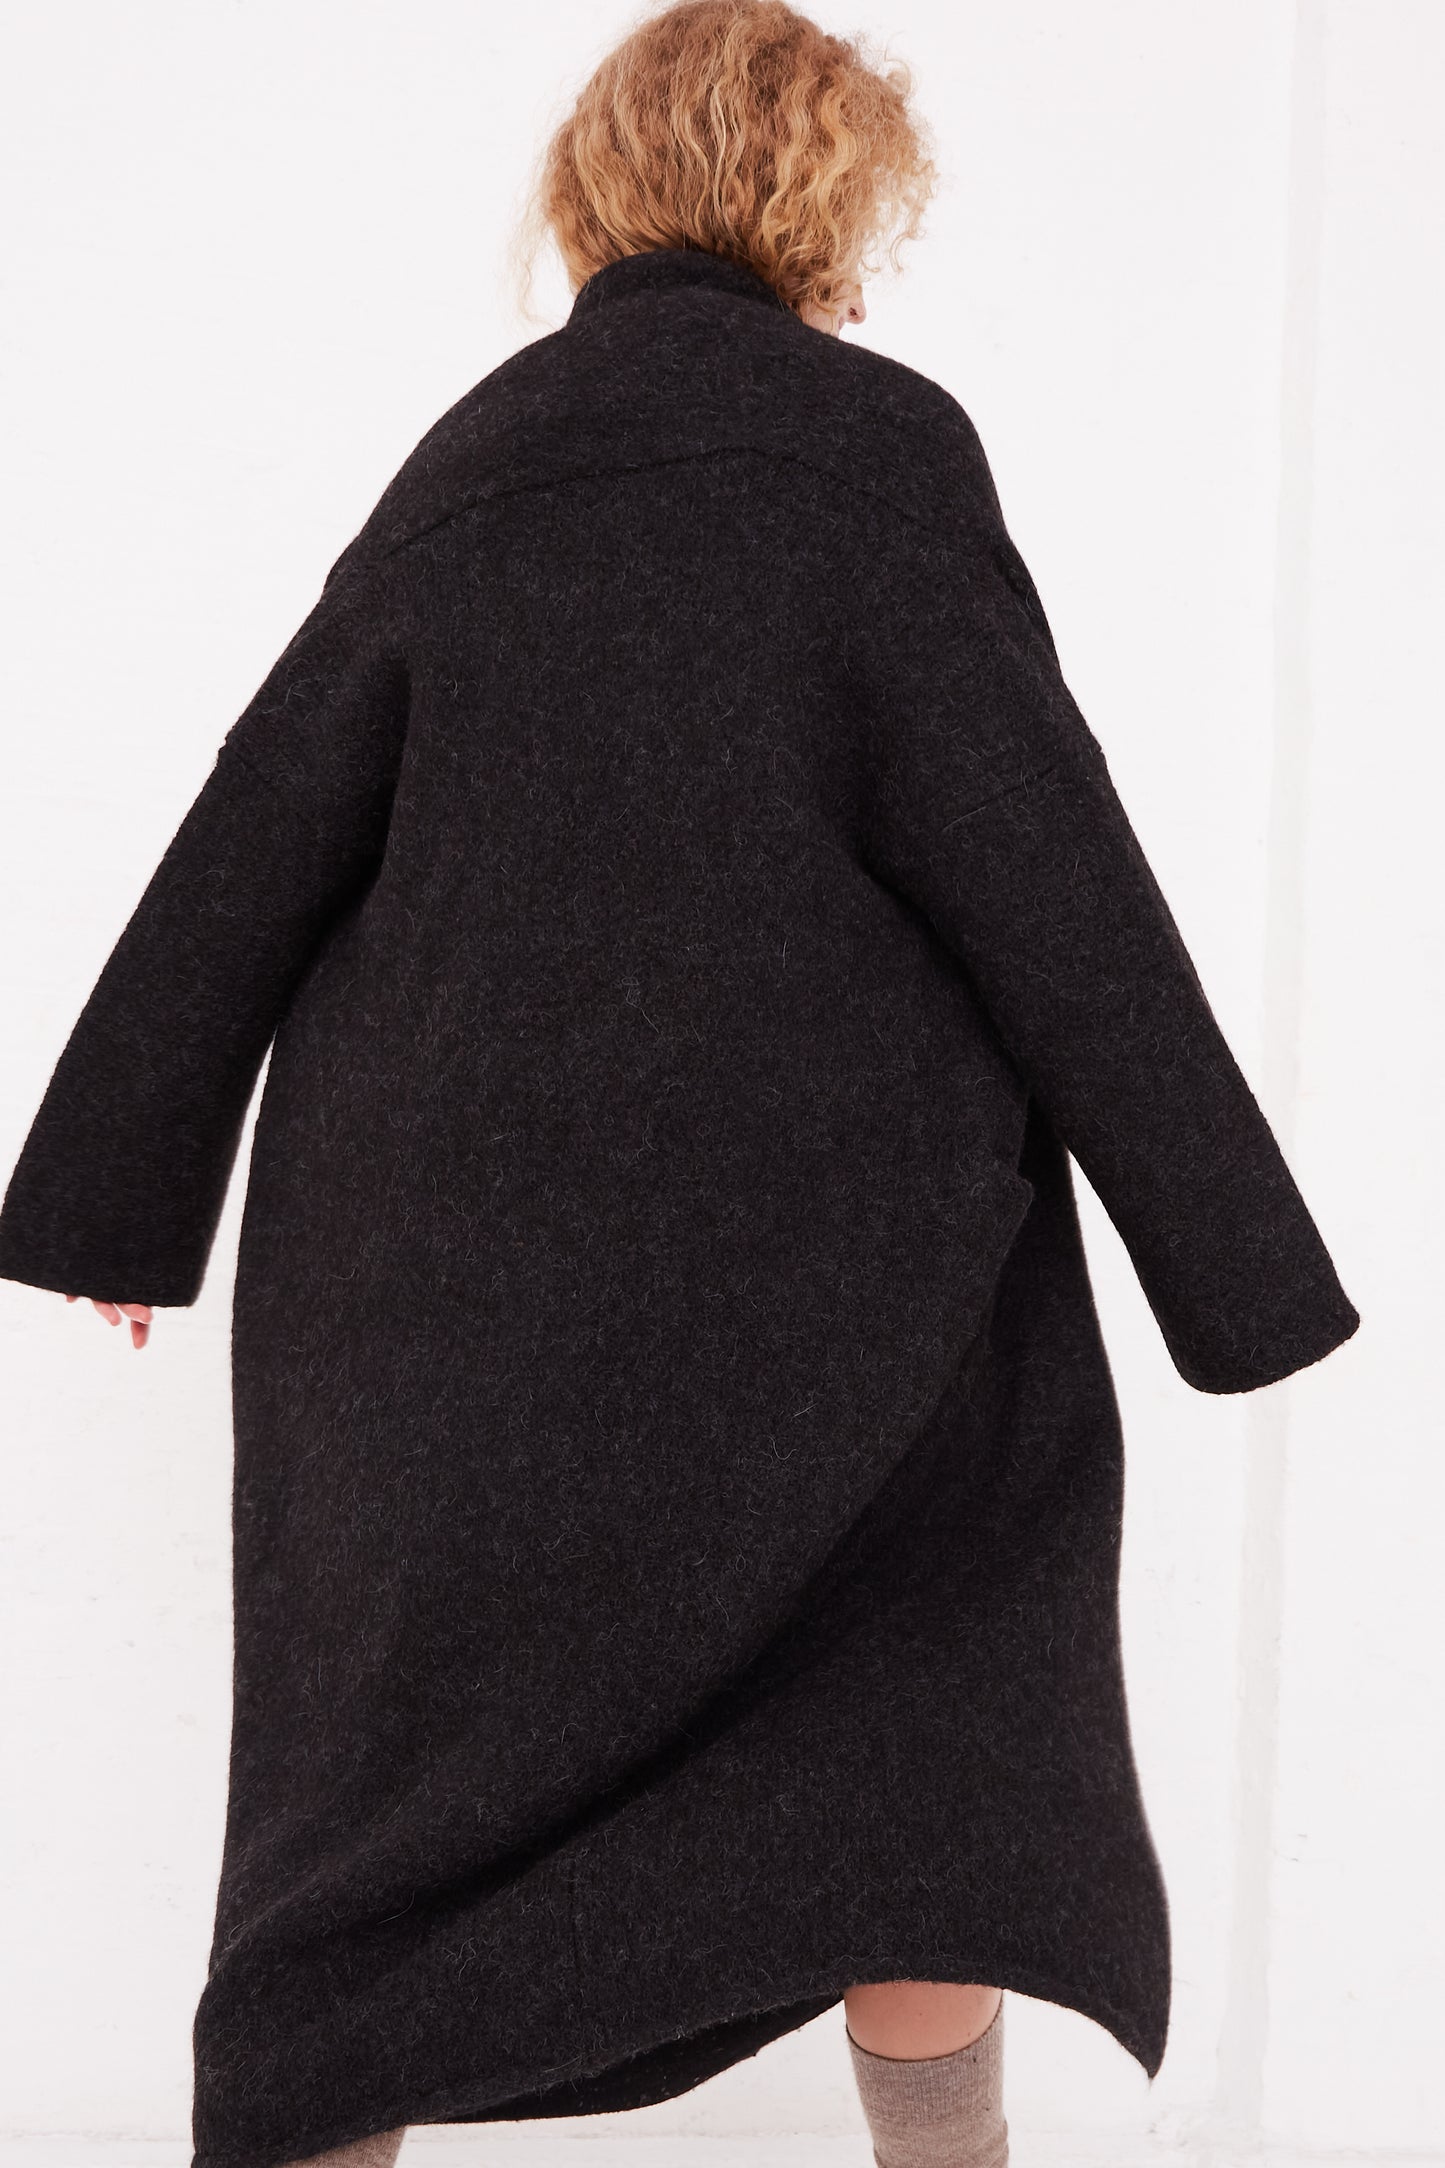 A woman is walking in a Lauren Manoogian Long Shawl Cardigan in Black made of Alpaca blend knit.